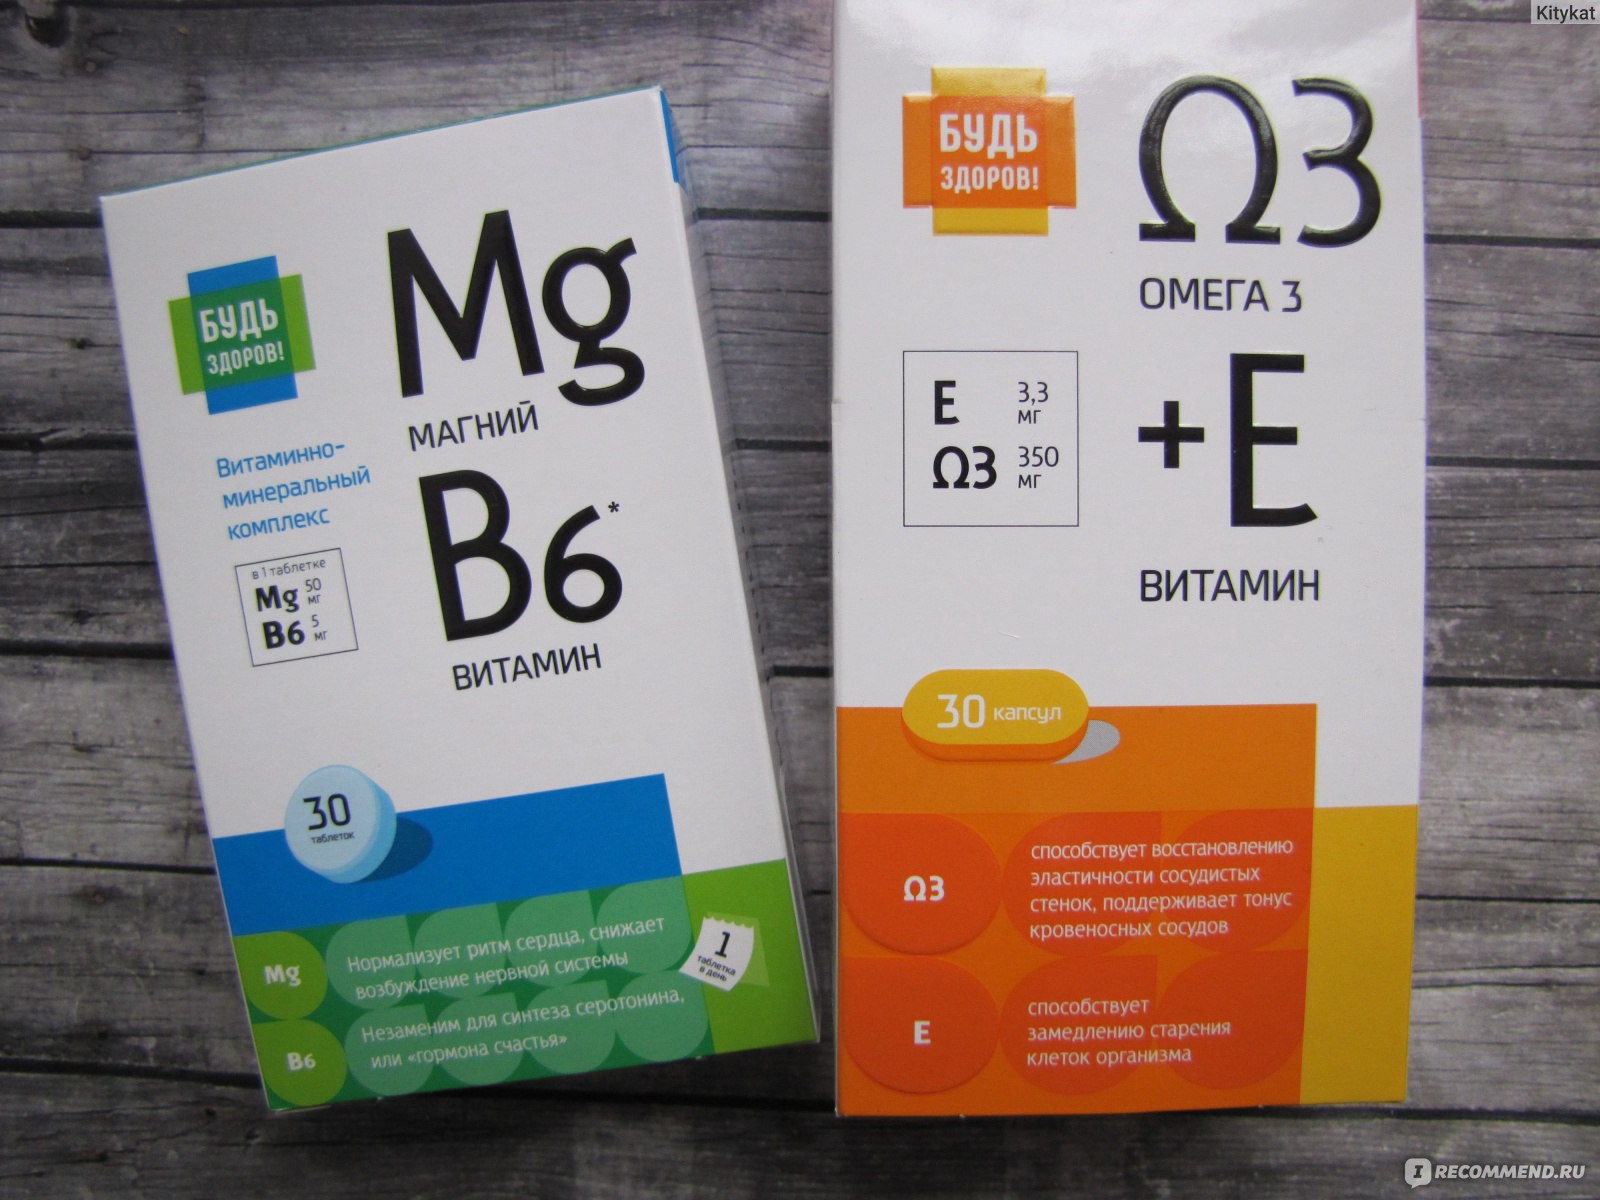 Витамин д3 омега магний. Будь здоров витамины группы b таб 30. Магний б6 будь здоров витамины. Витаминно минеральный комплекс магний в6 будь здоров. Витаминно минеральный комплекс магний в6.